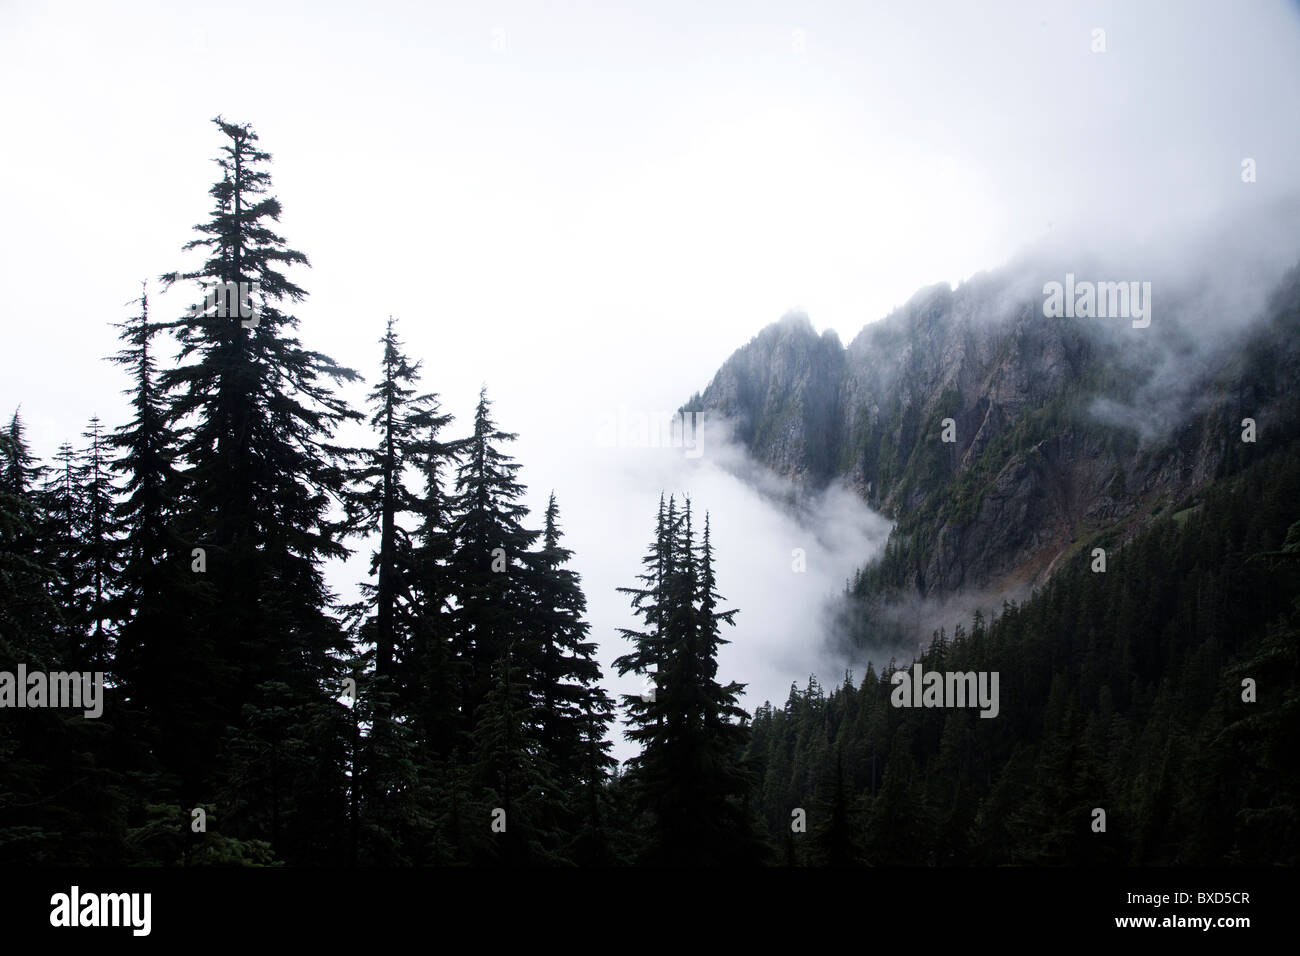 A landscape image of a foggy mountain scene. Stock Photo